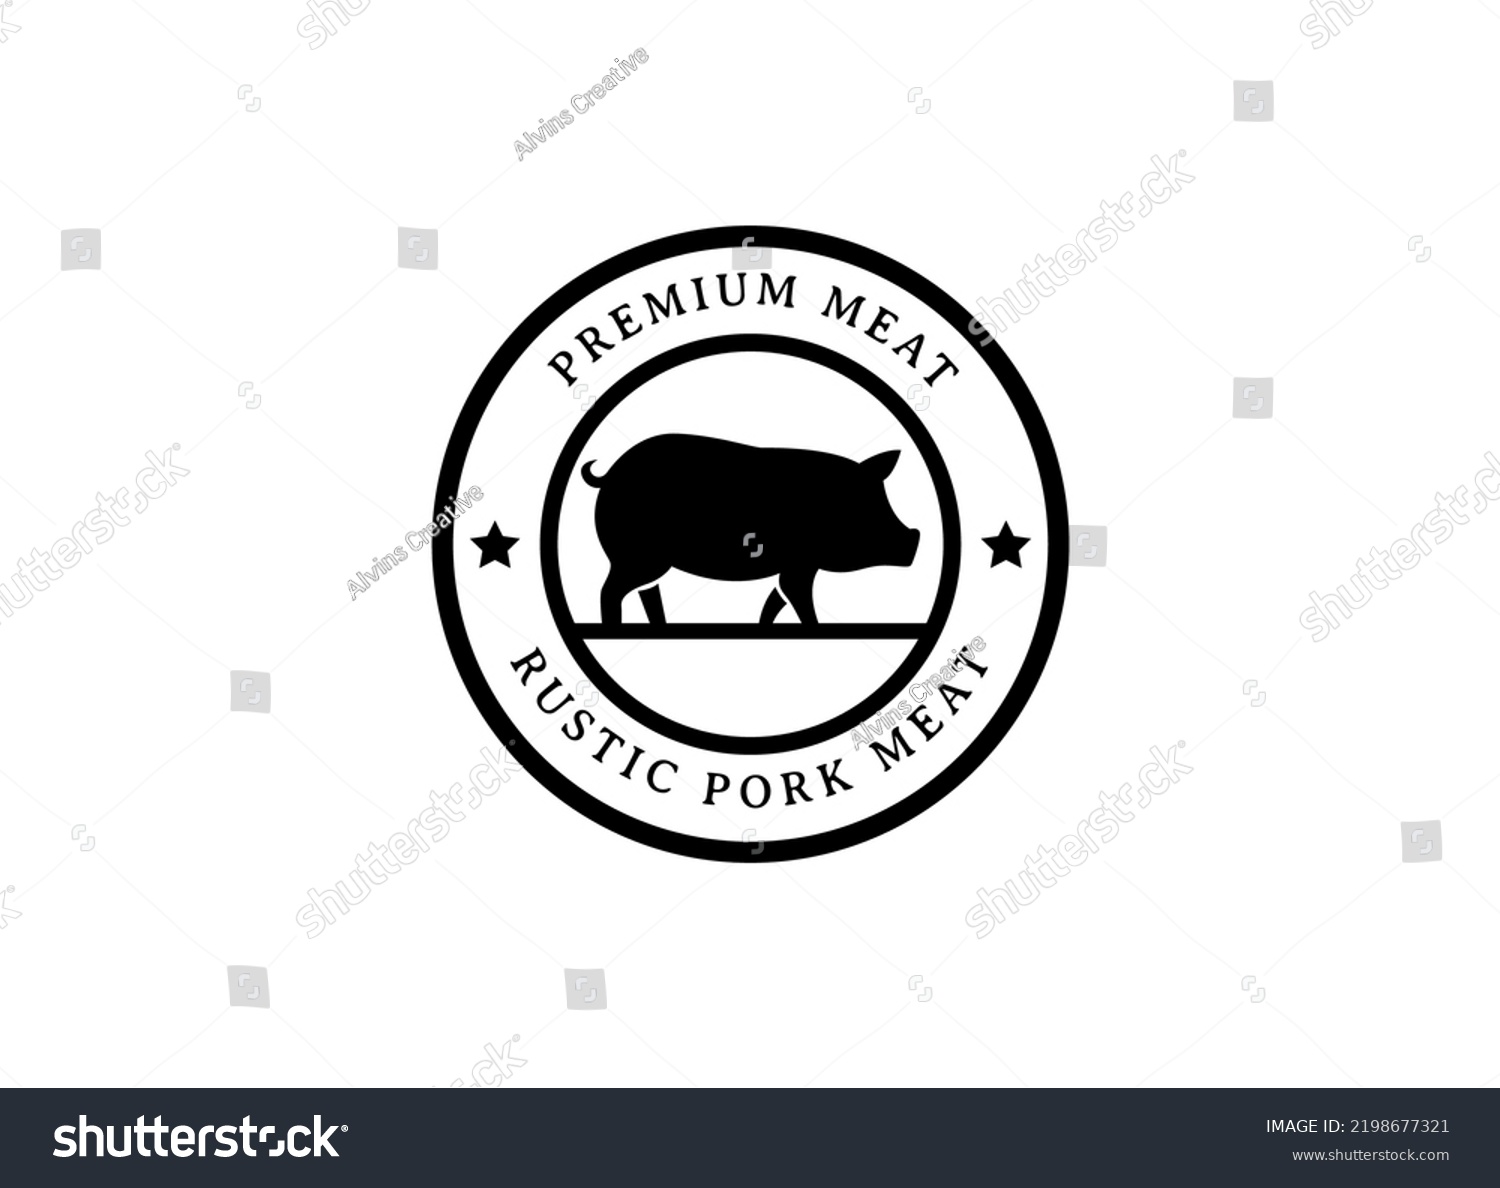 Rustic Pork Meat Grill Restaurant Vector Stock Vector (Royalty Free ...